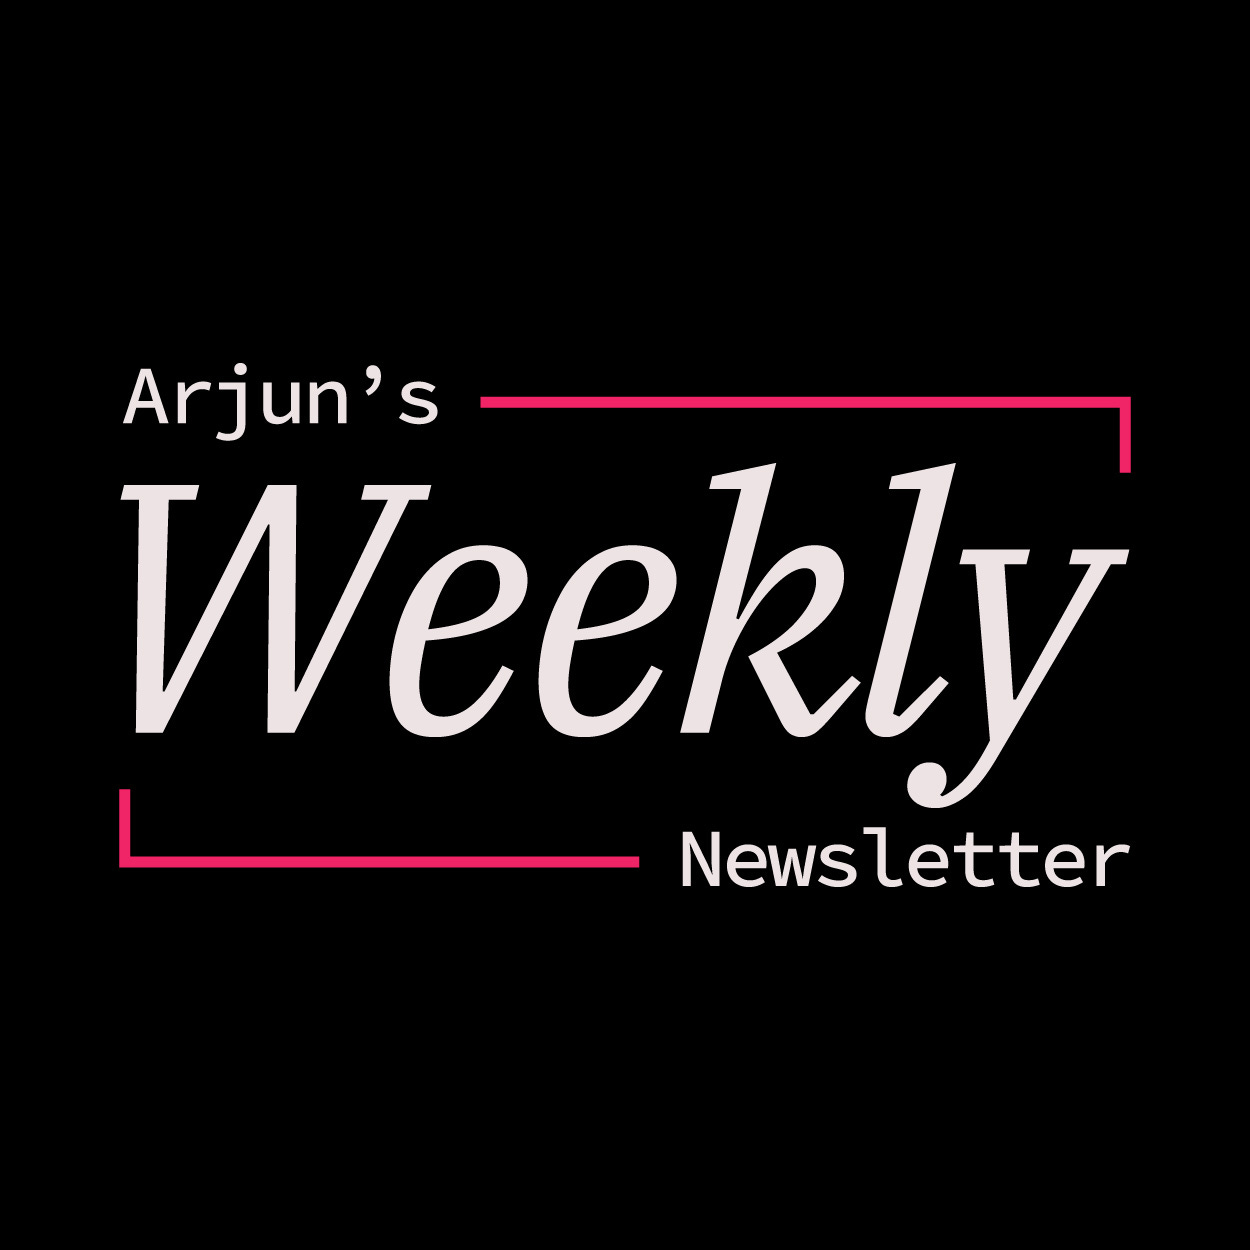 Arjun's Weekly Newsletter